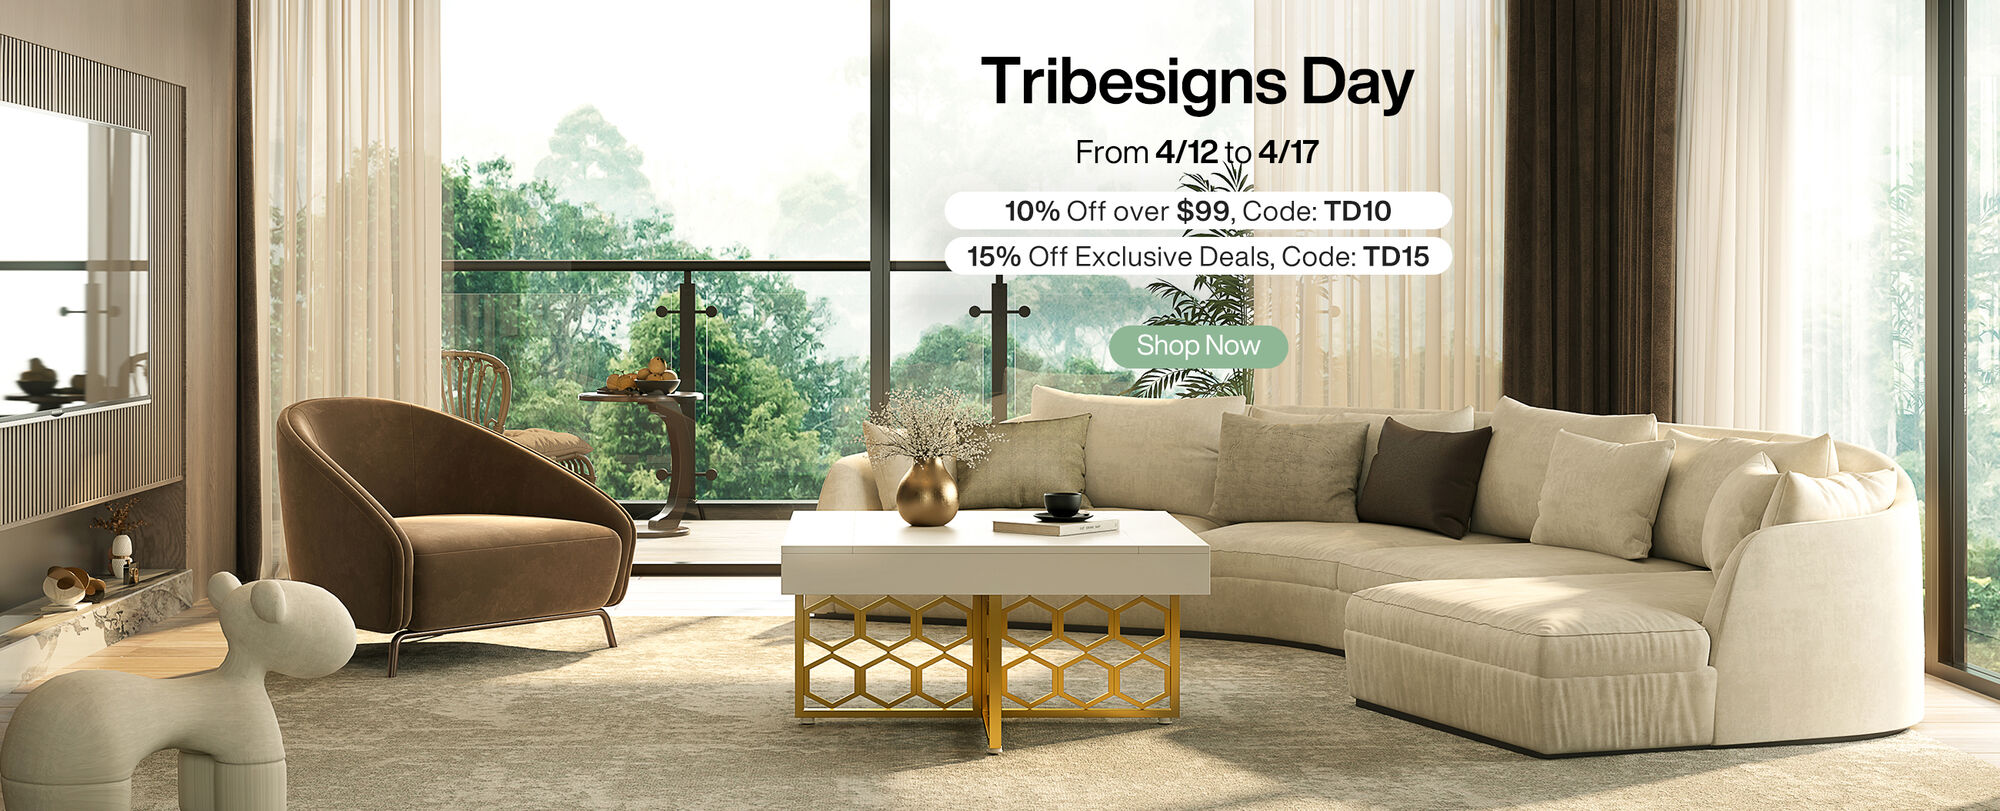 Tribesigns Day